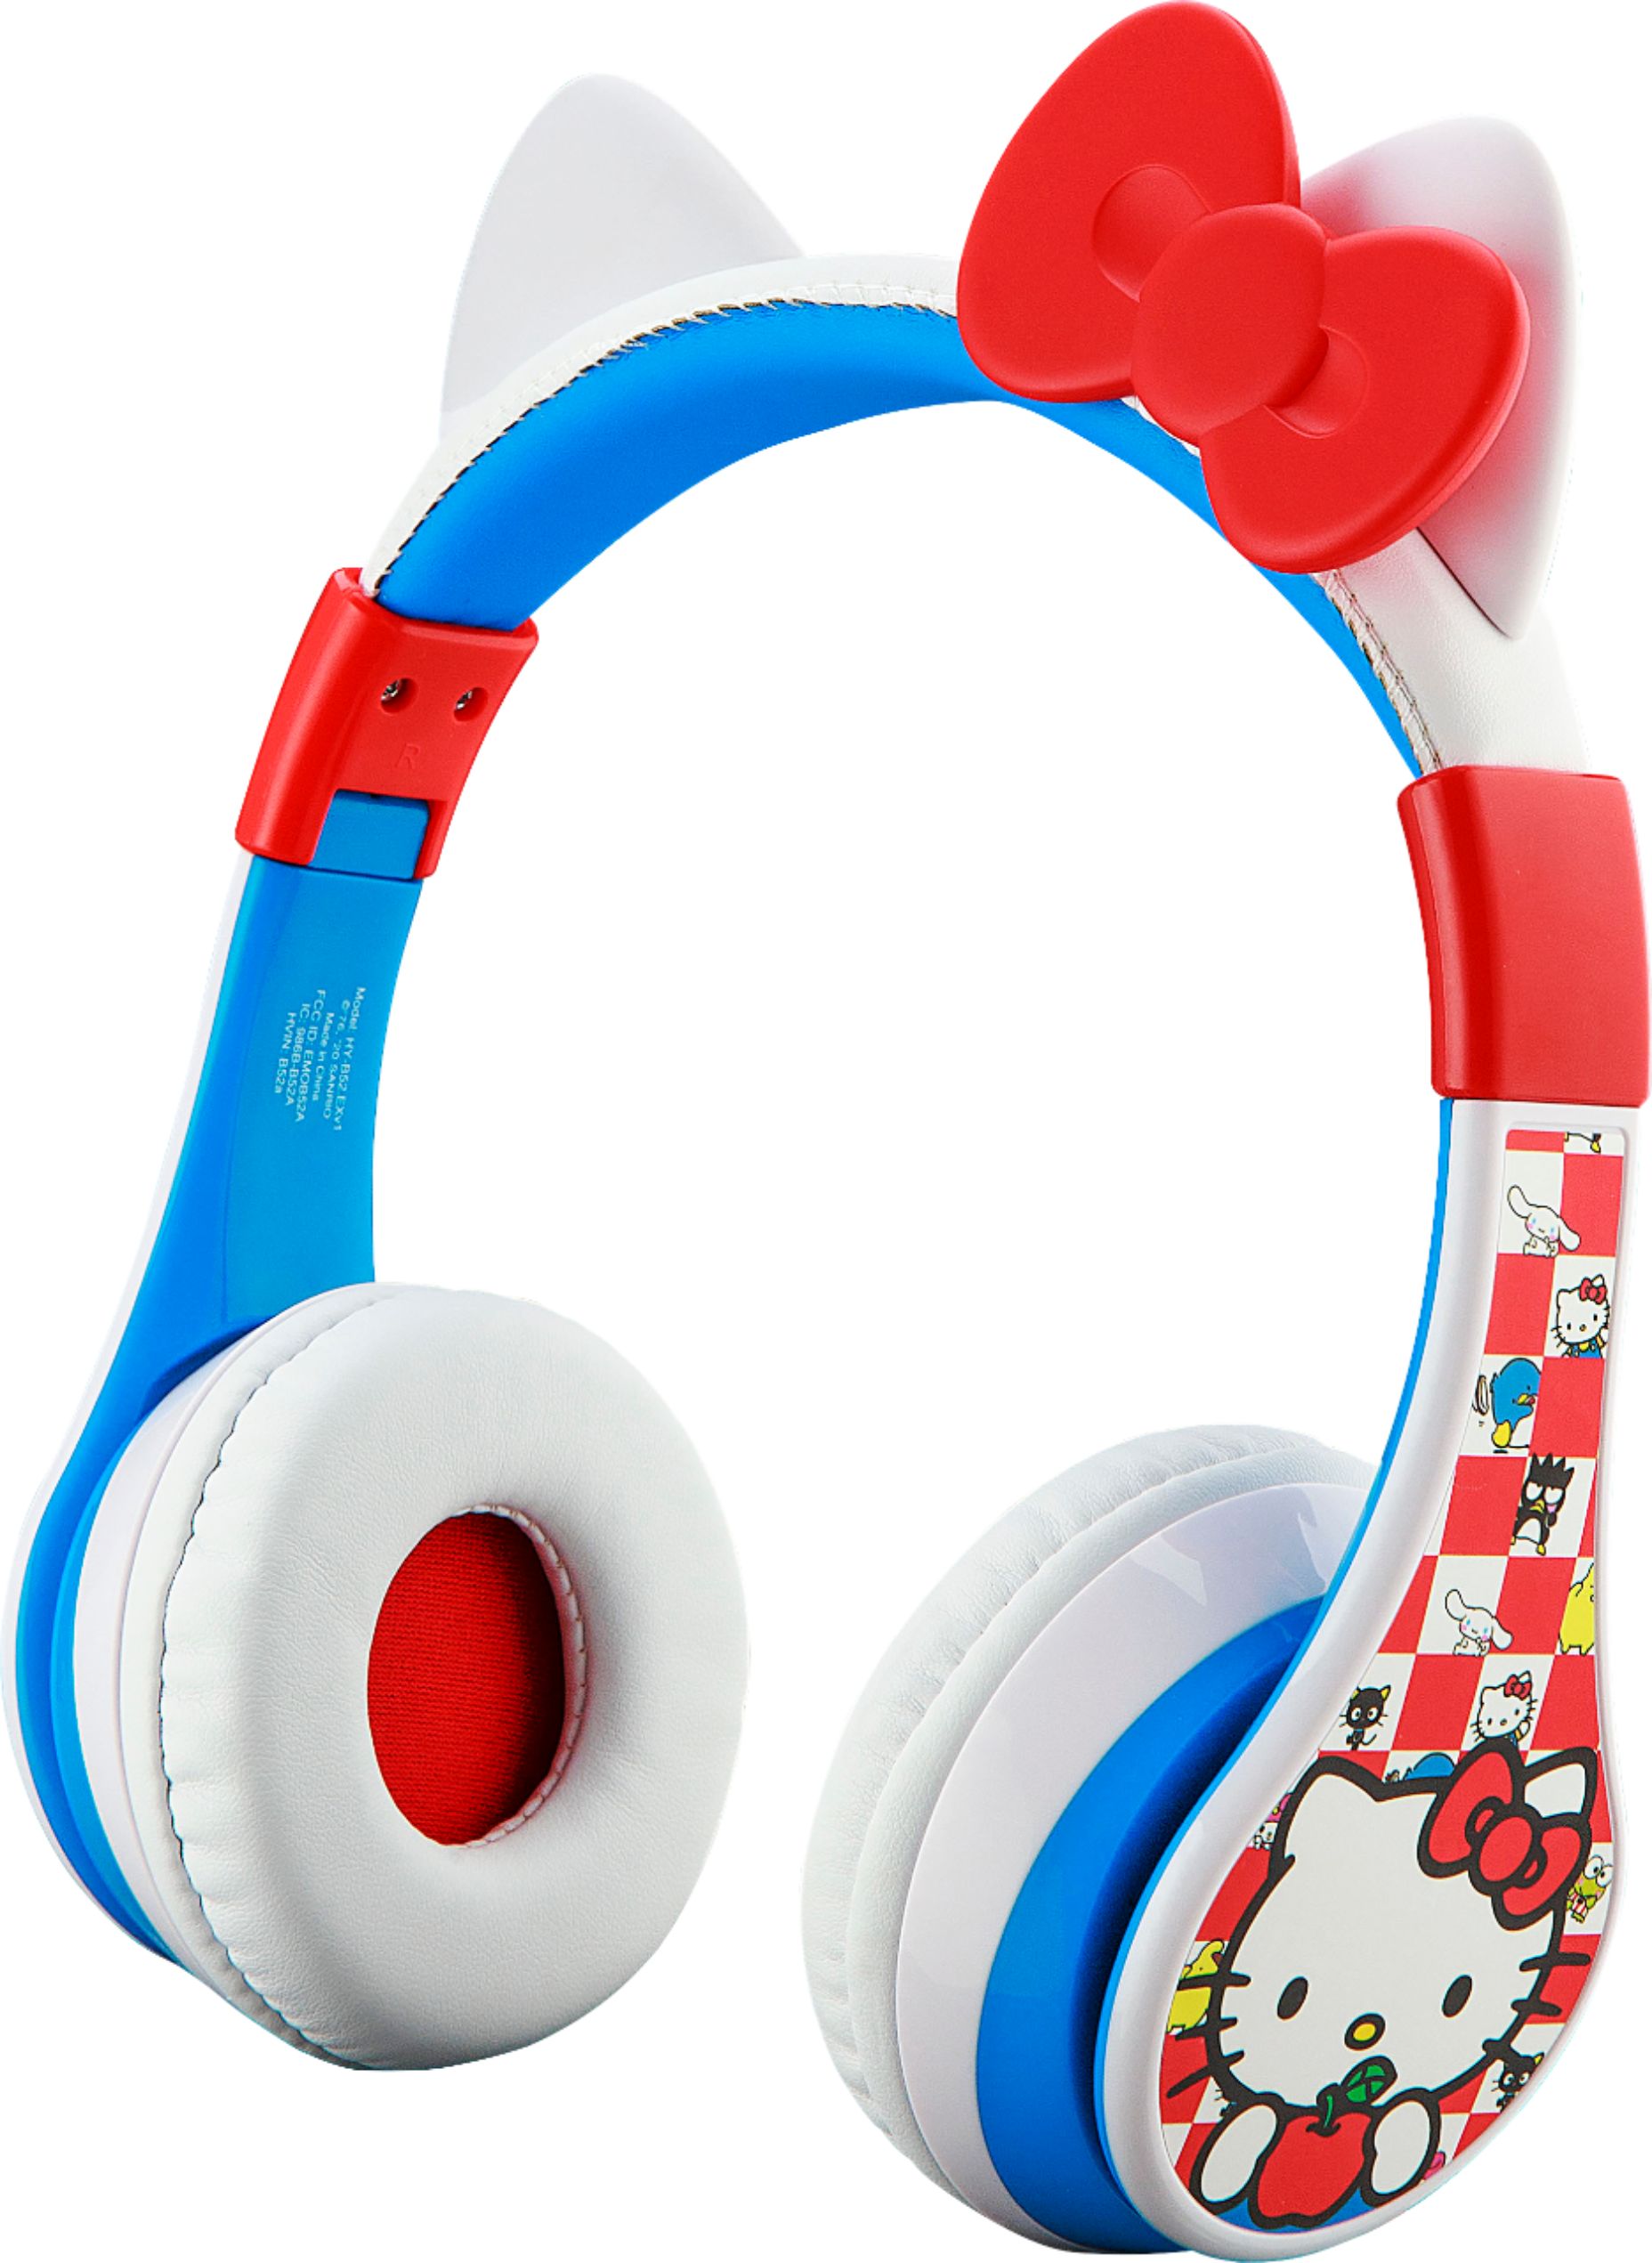 Left View: ekids Hello Kitty Bluetooth Headphones for Kids, Wireless Headphones with Microphone